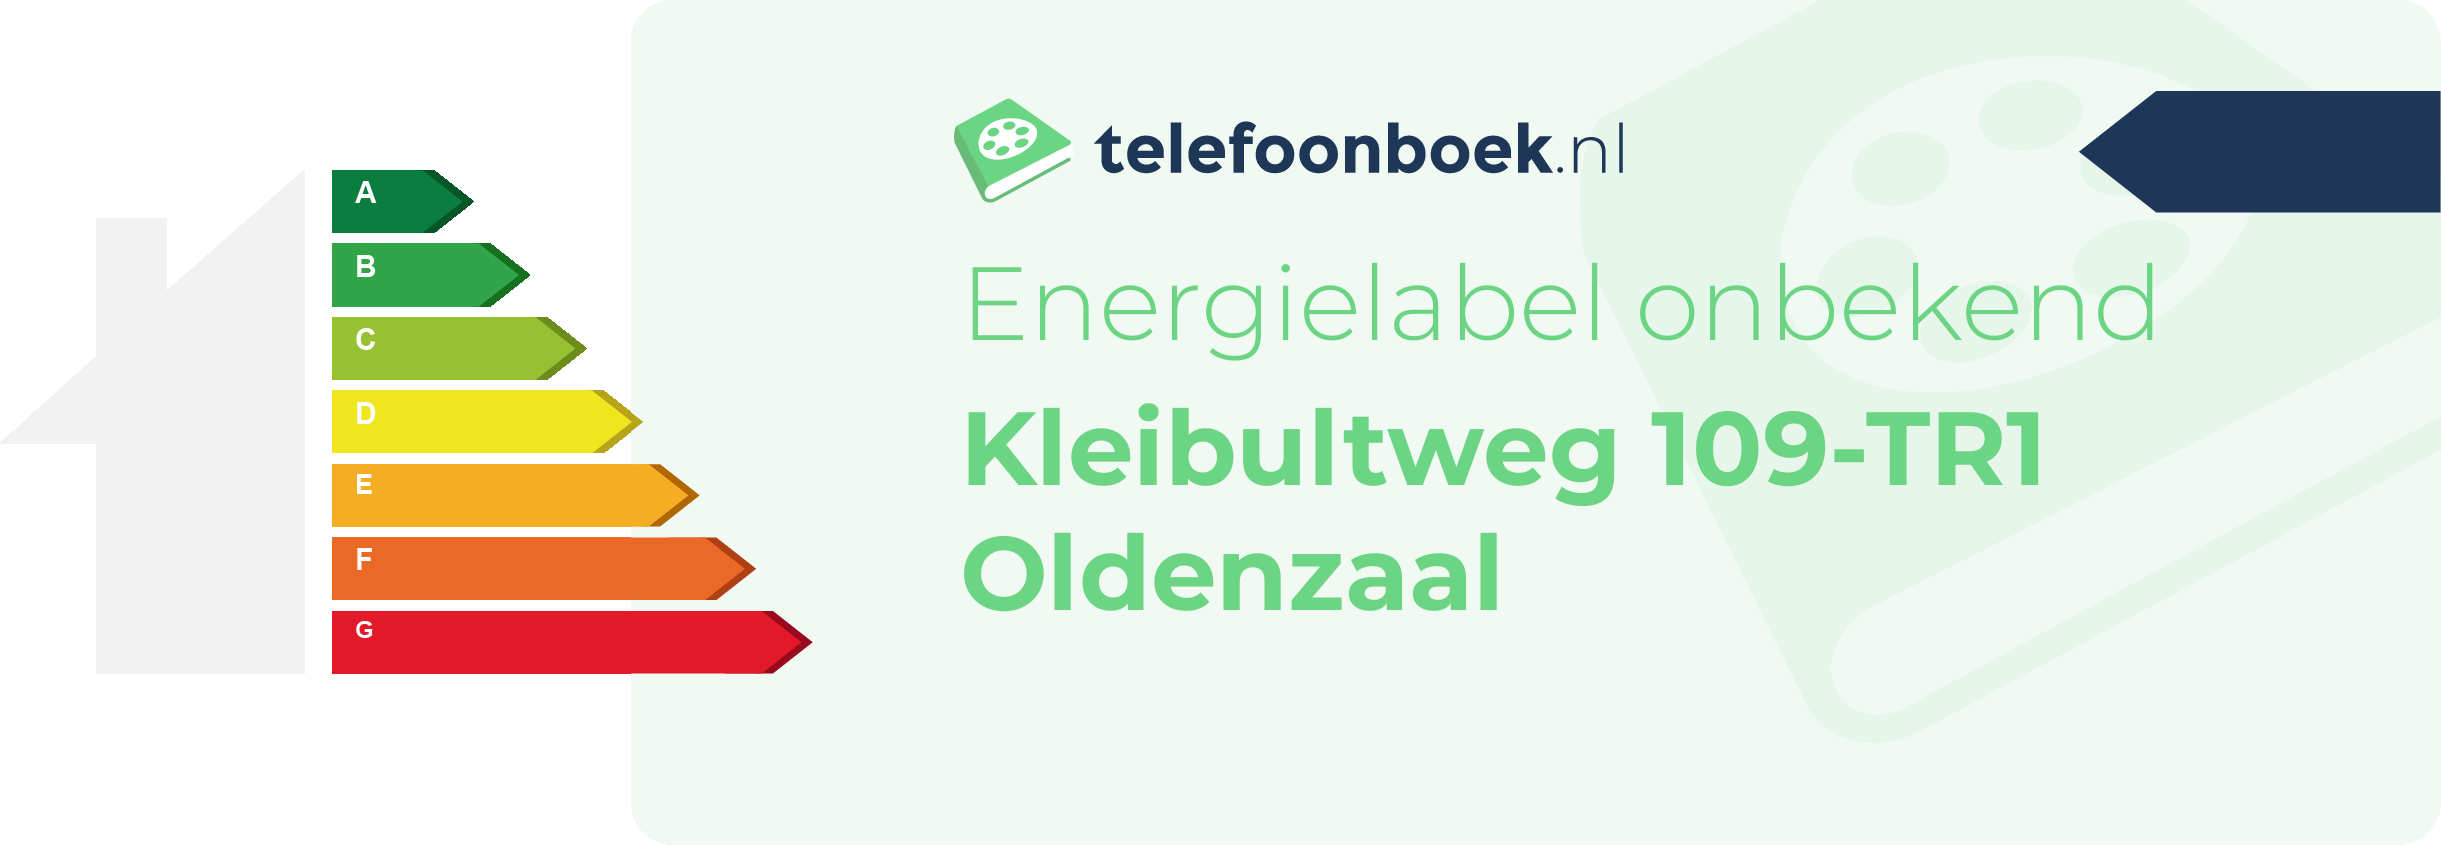 Energielabel Kleibultweg 109-TR1 Oldenzaal